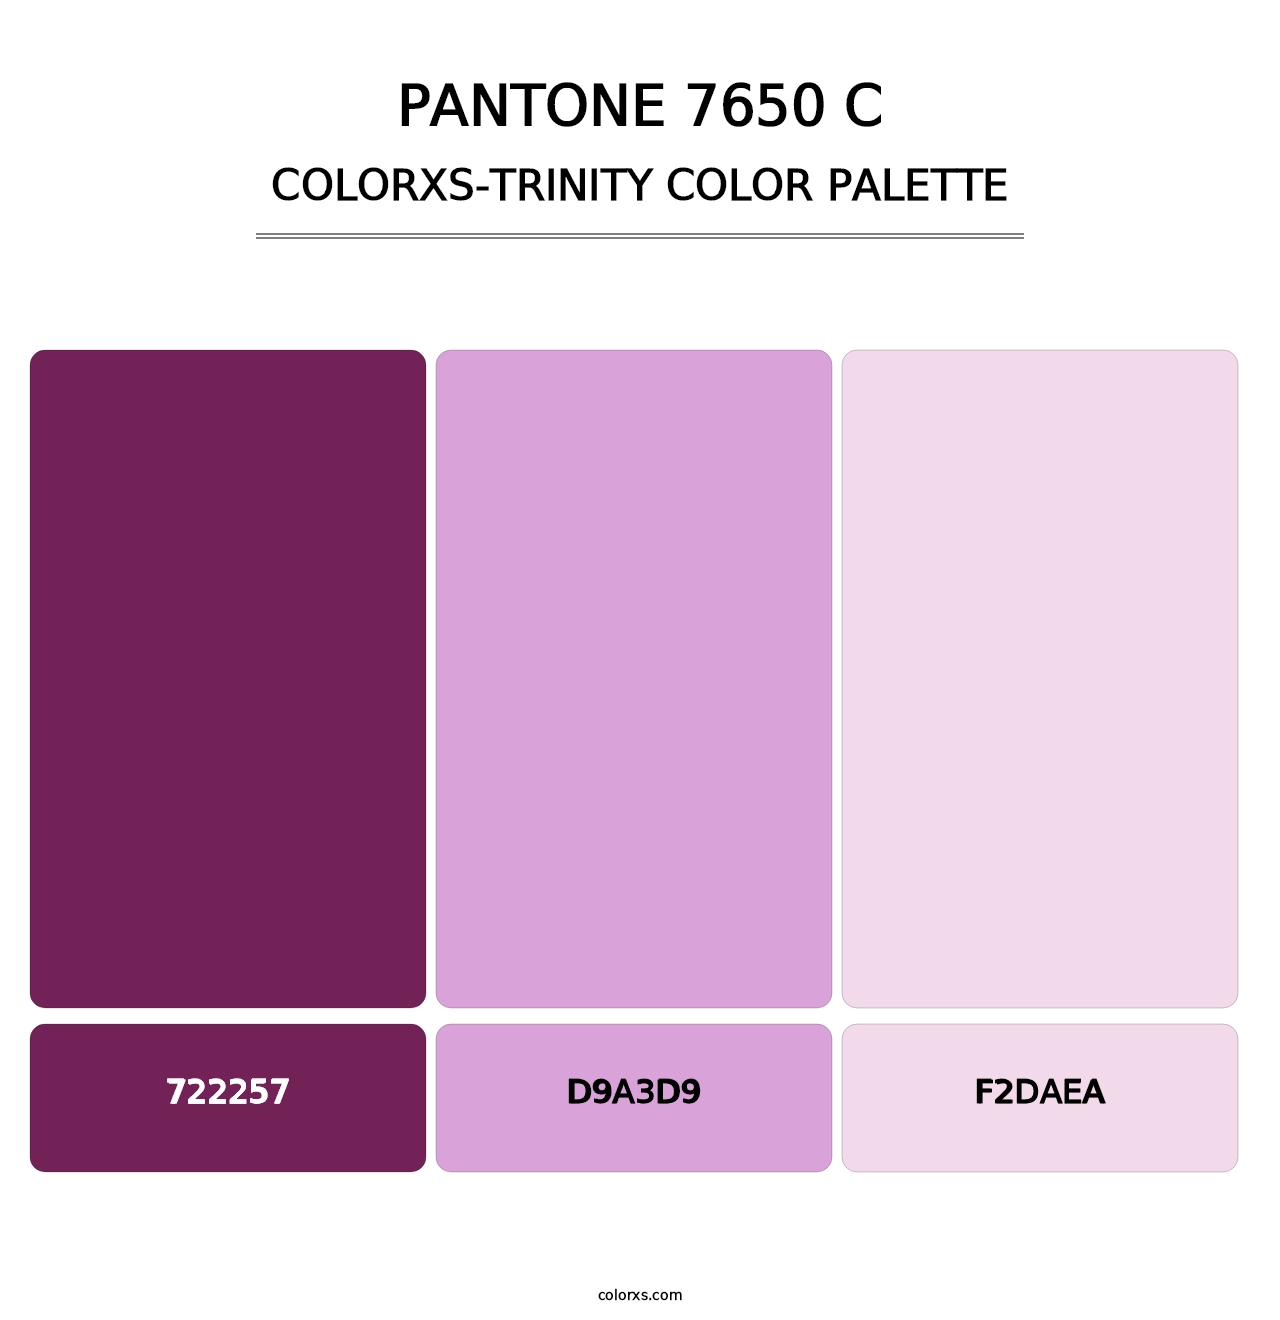 PANTONE 7650 C - Colorxs Trinity Palette